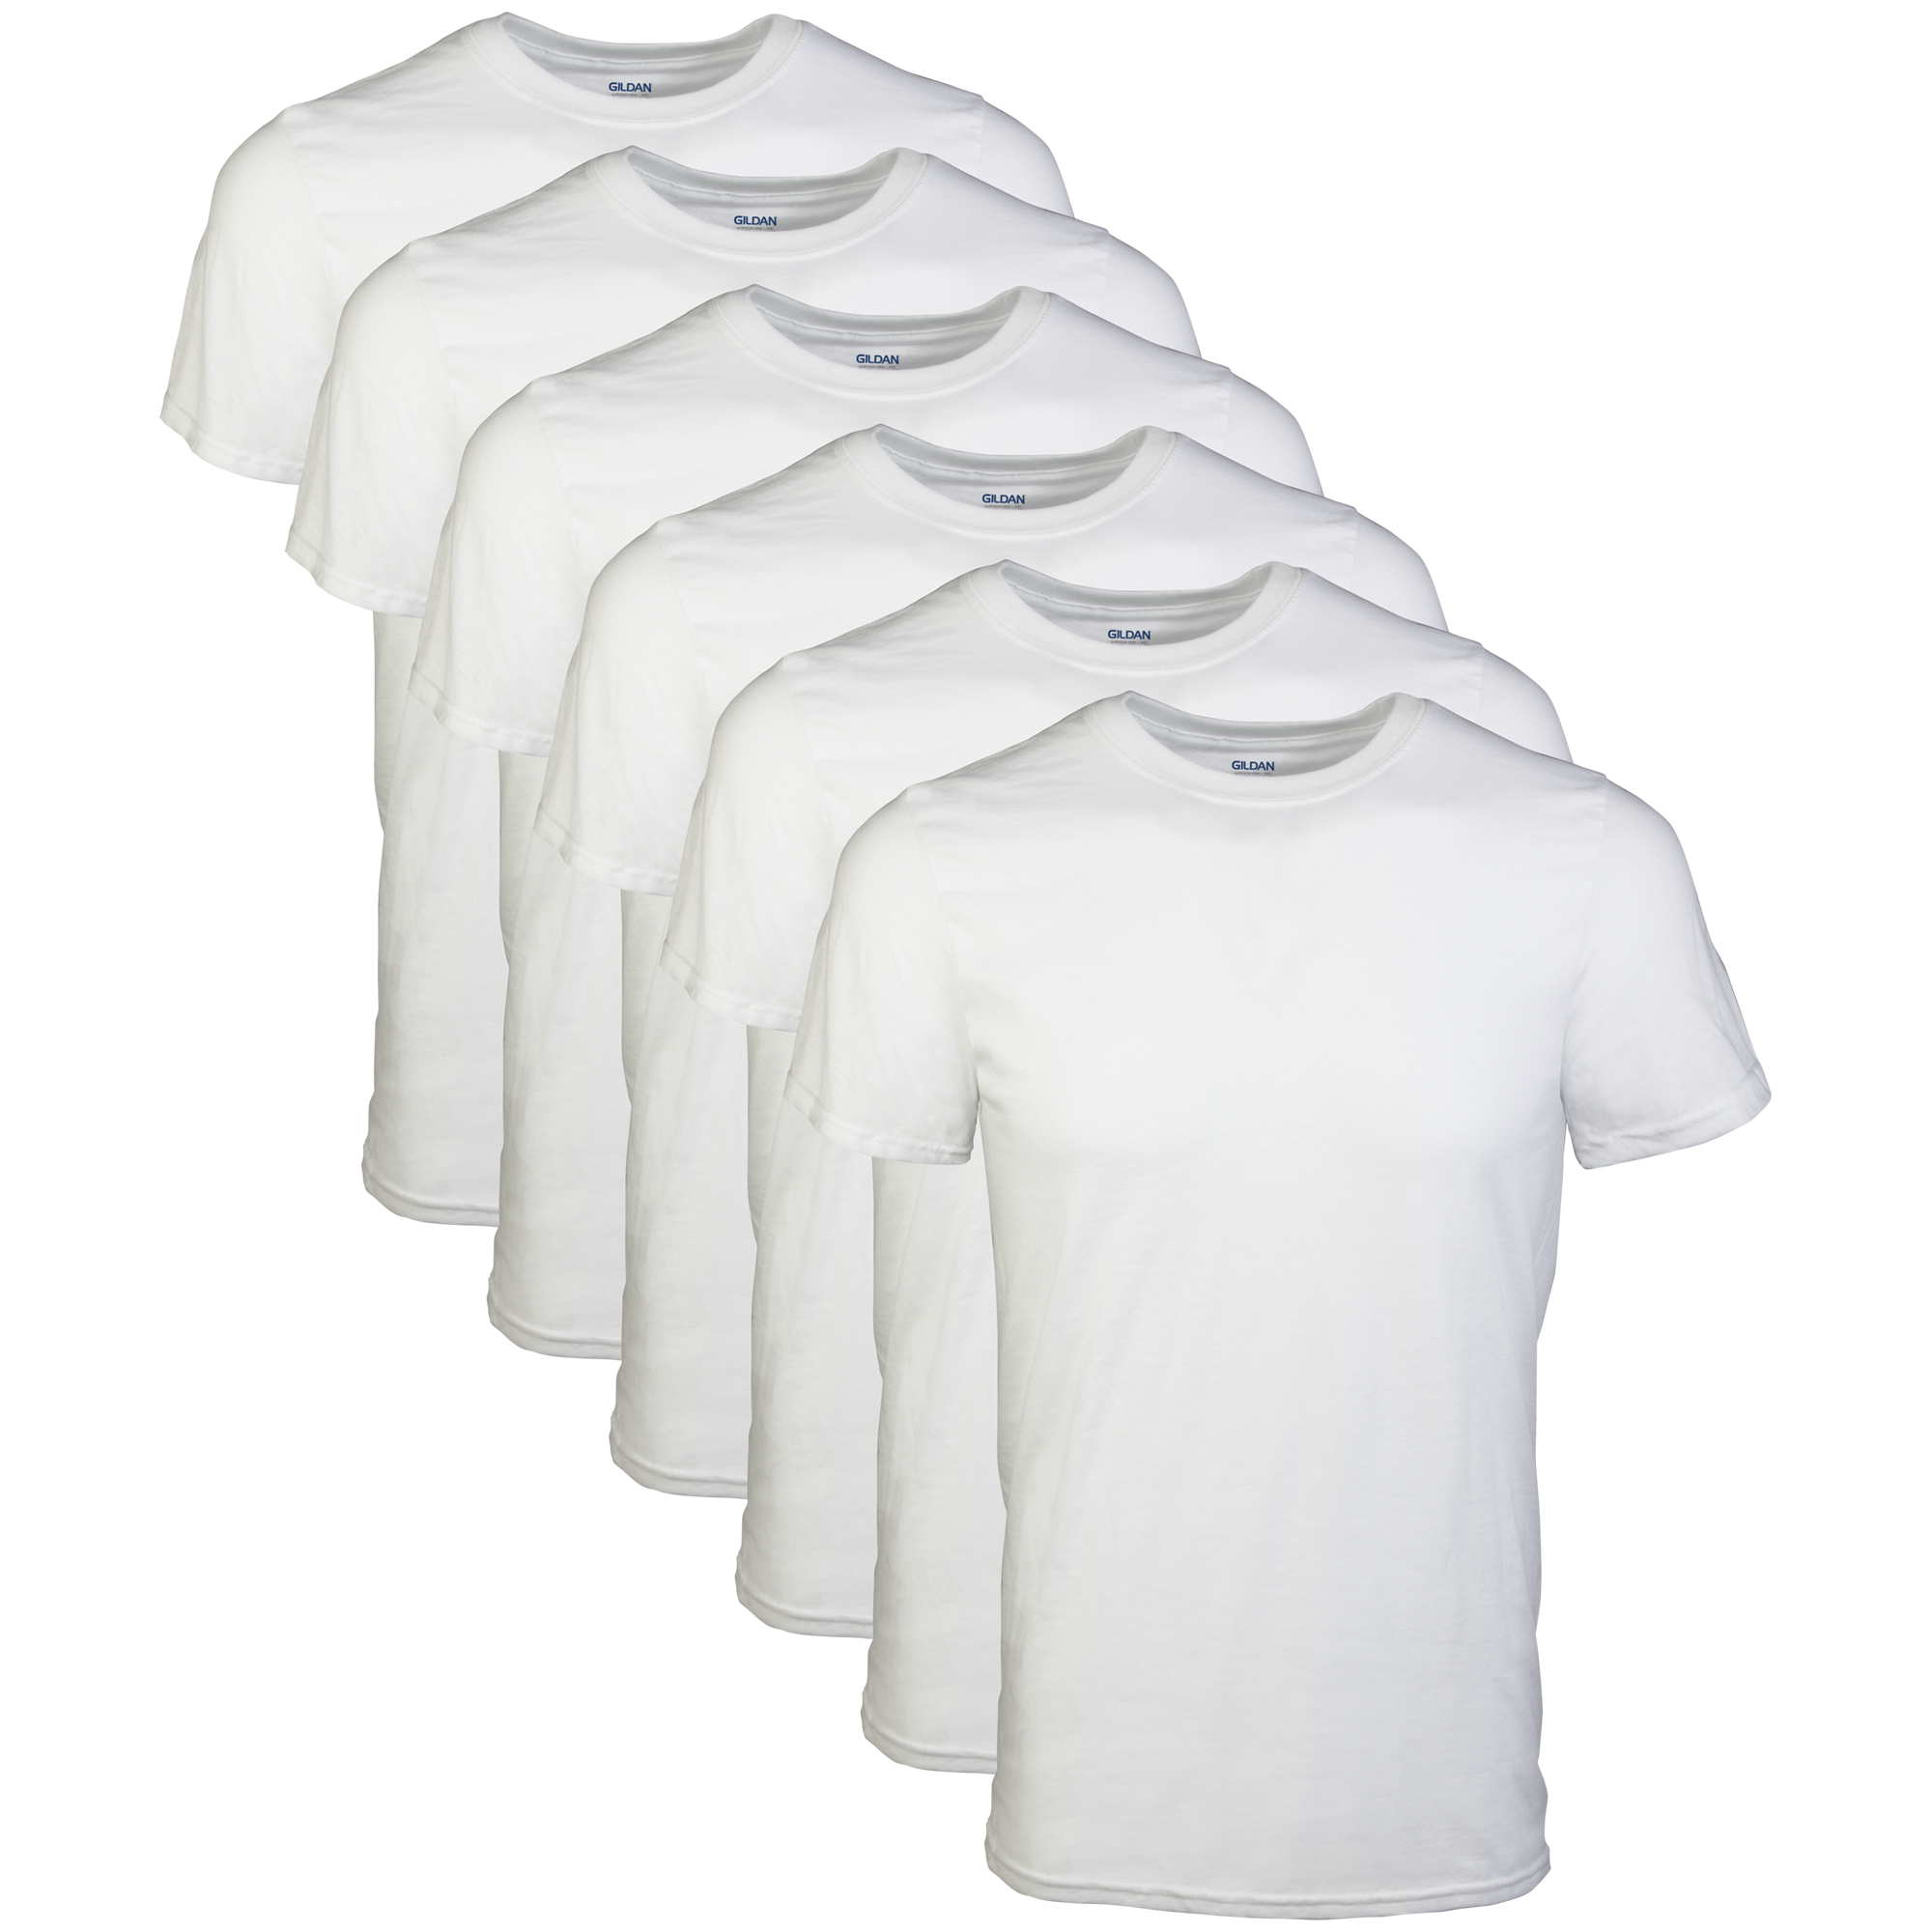 Gildan Adult Men's Short Sleeve Crew White T-Shirt, 6-Pack, Sizes S-2XL - image 4 of 4